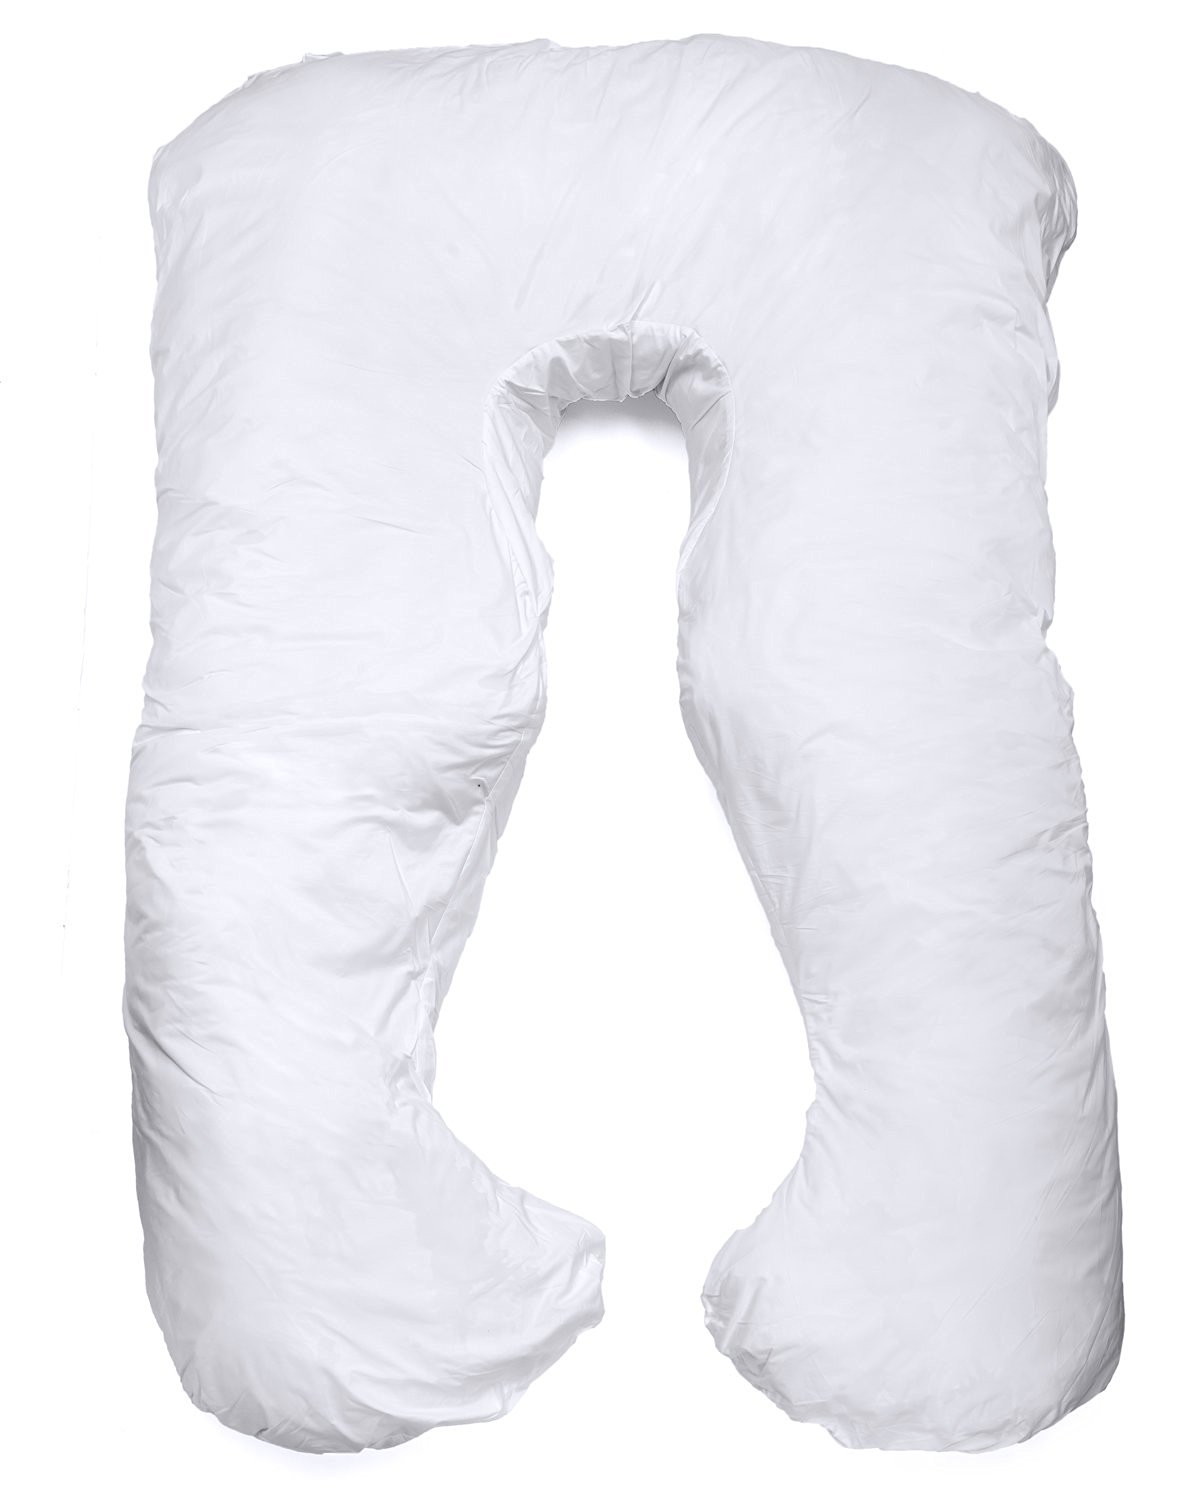 S2BMOM Premium Contoured Total Body Pillow / Maternity Pillow / Pregnancy Pillow ( U Shape ) *FREE SHIPPING*